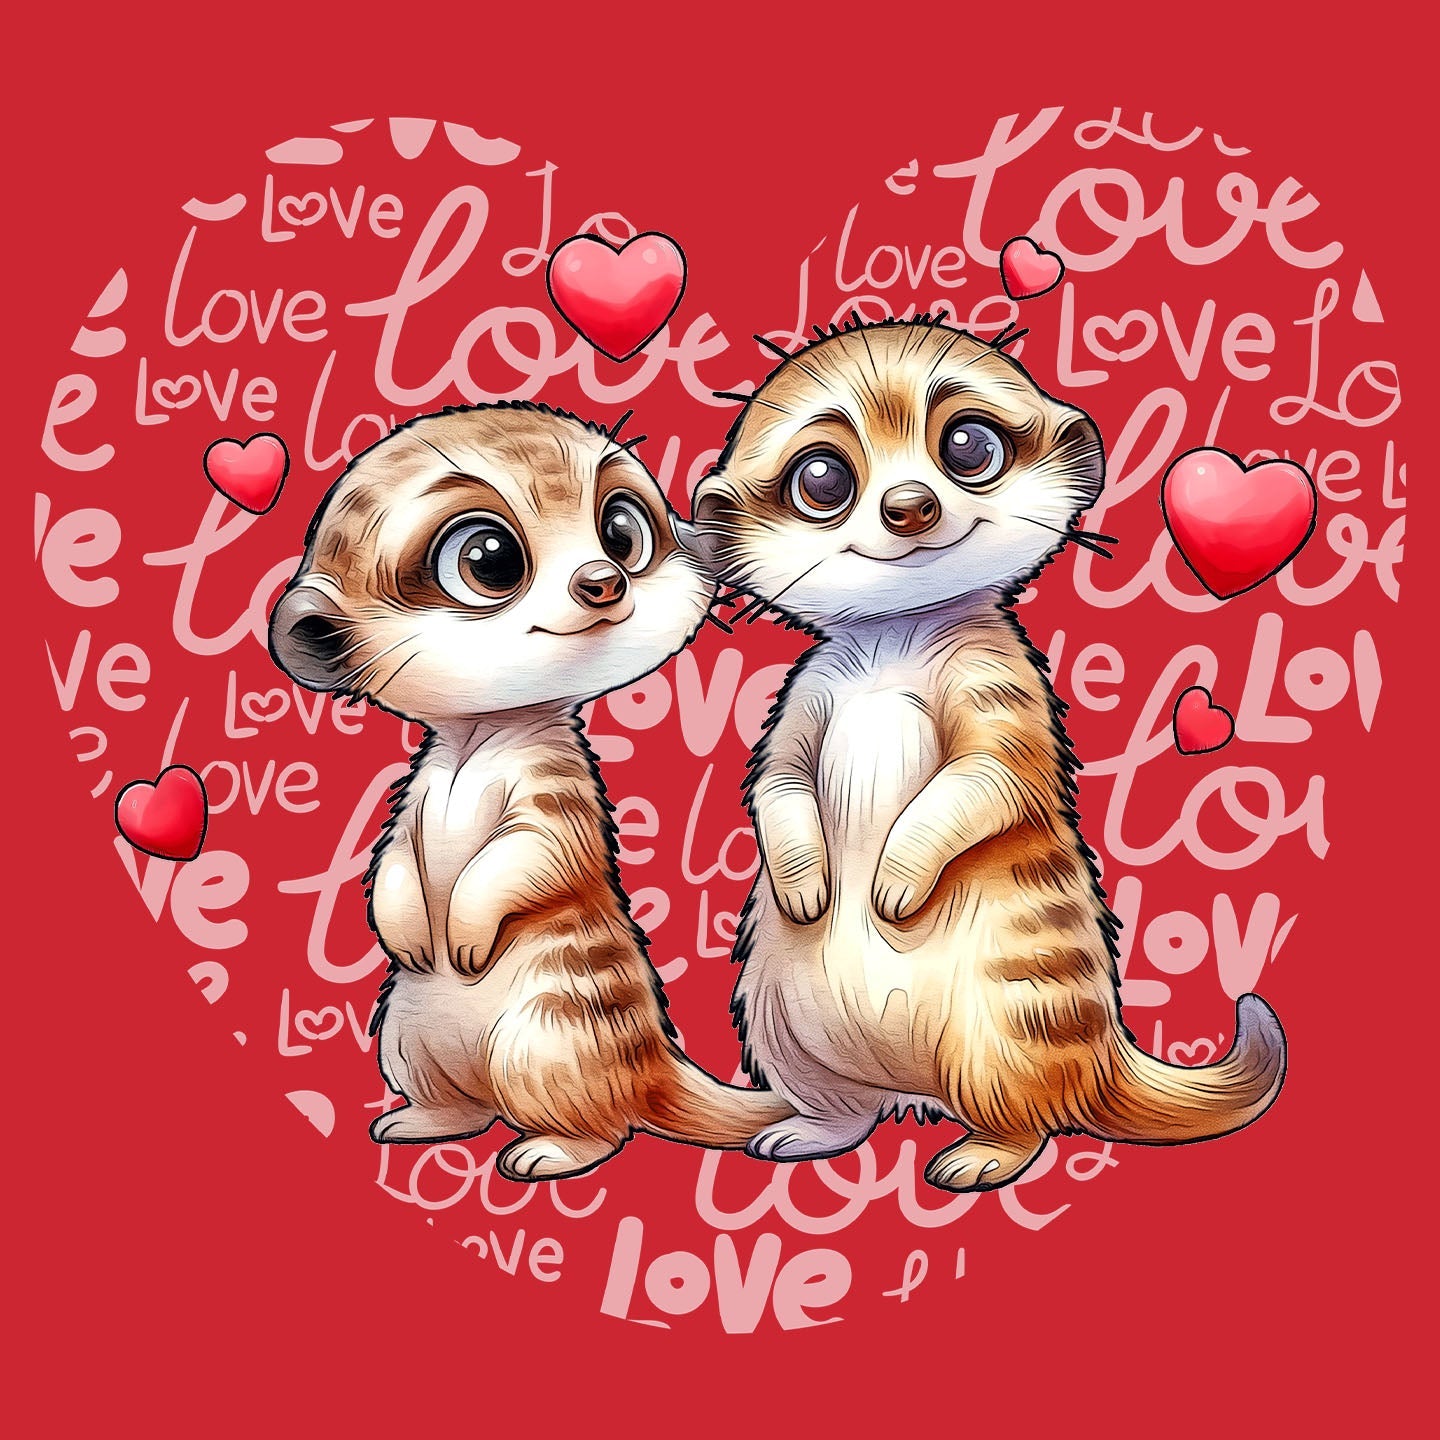 Meerkat Love Heart - Kids' Unisex T-Shirt